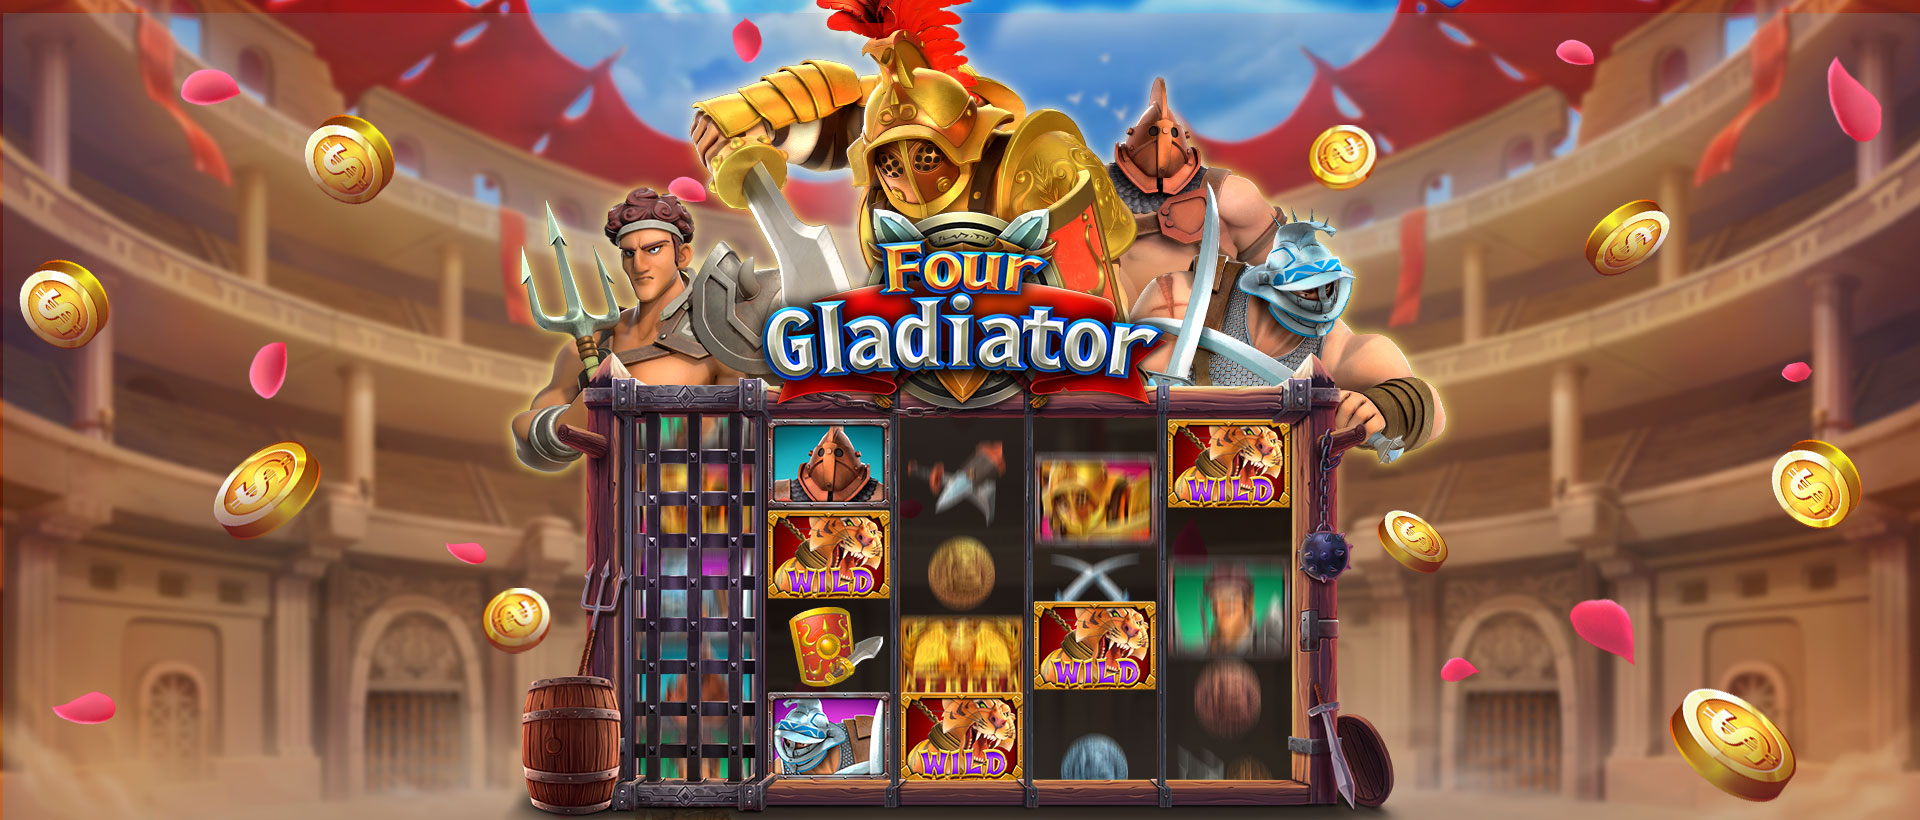 Four Gladiator